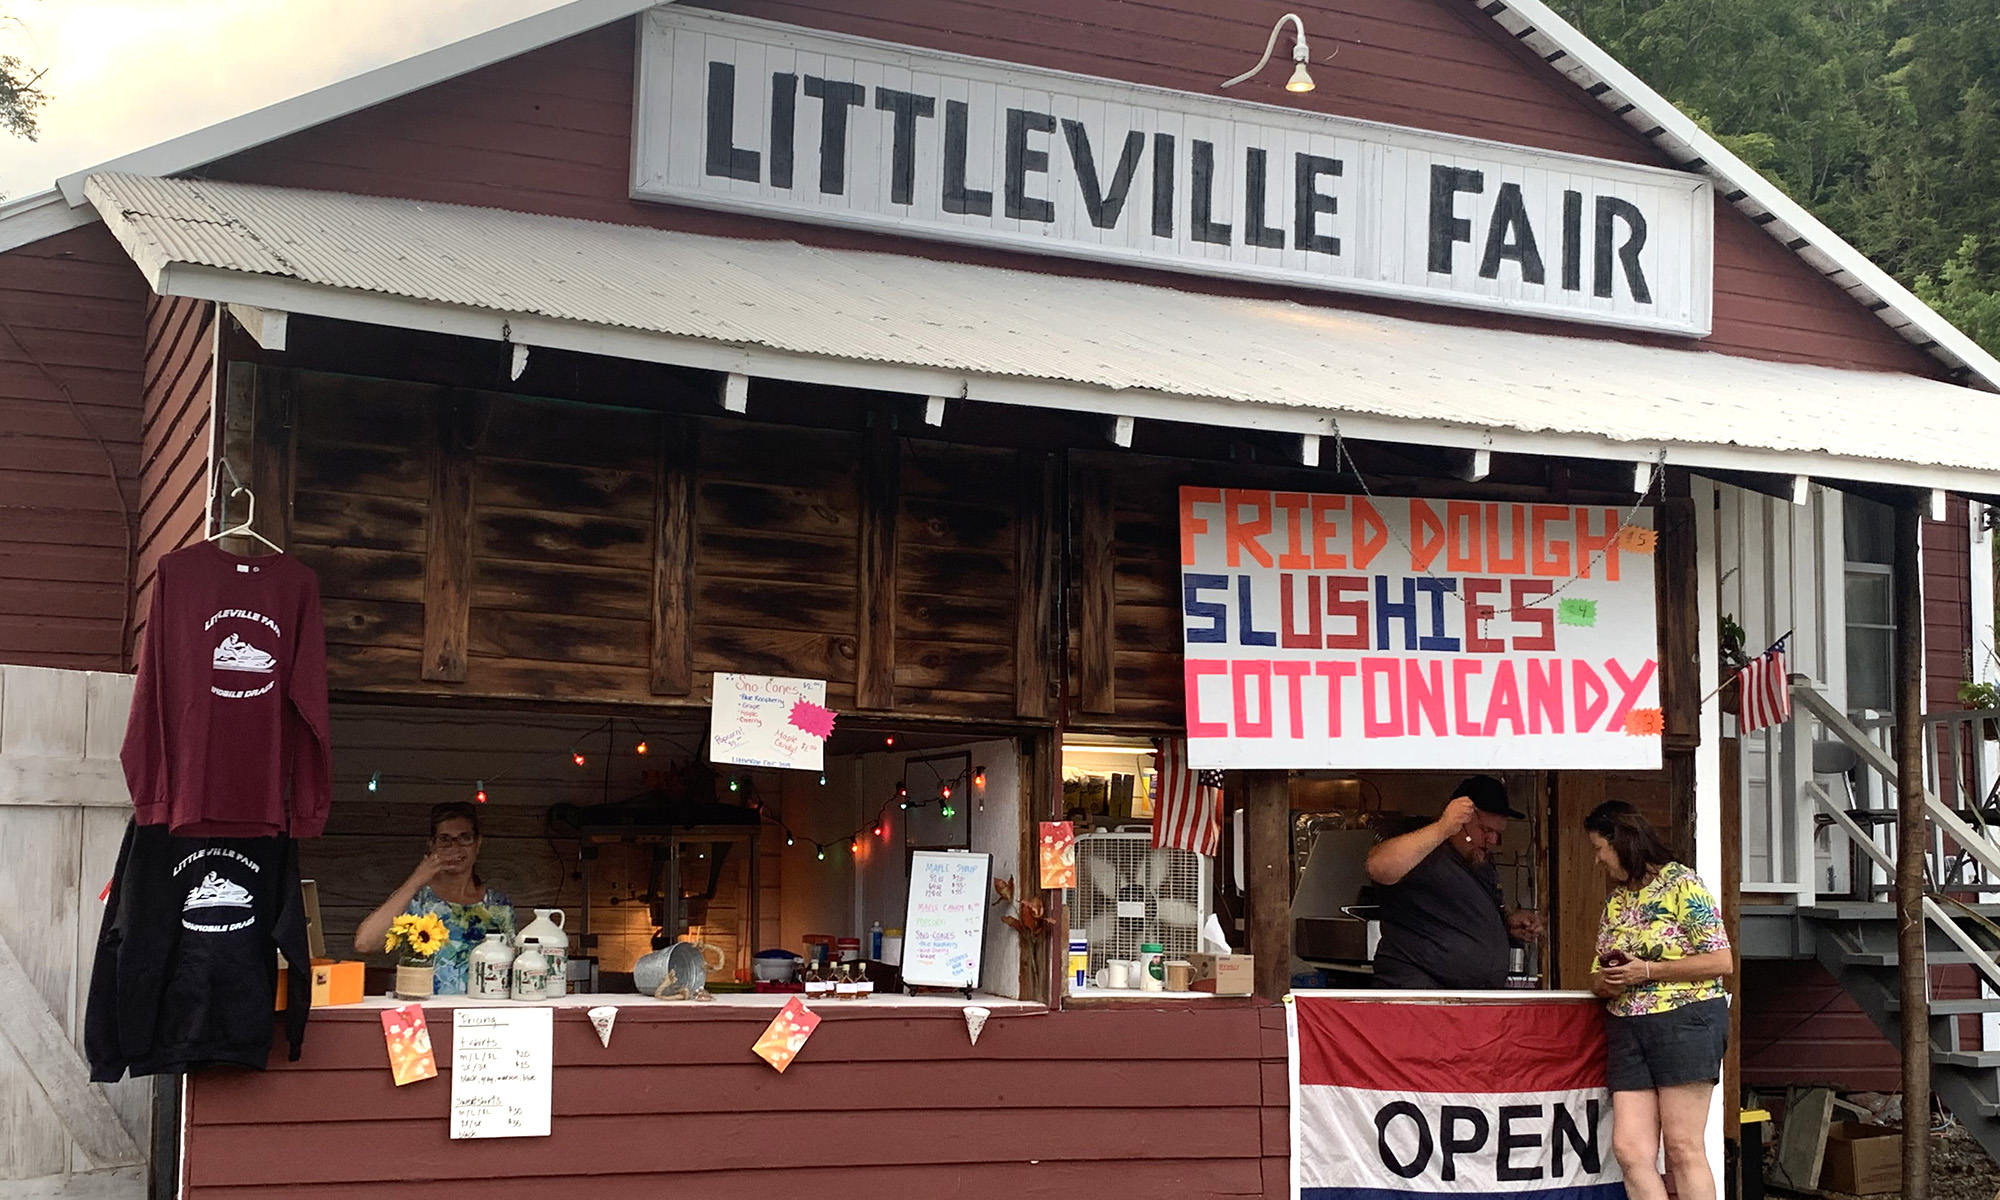 2021 Littleville Fair - Fun for Everyone!